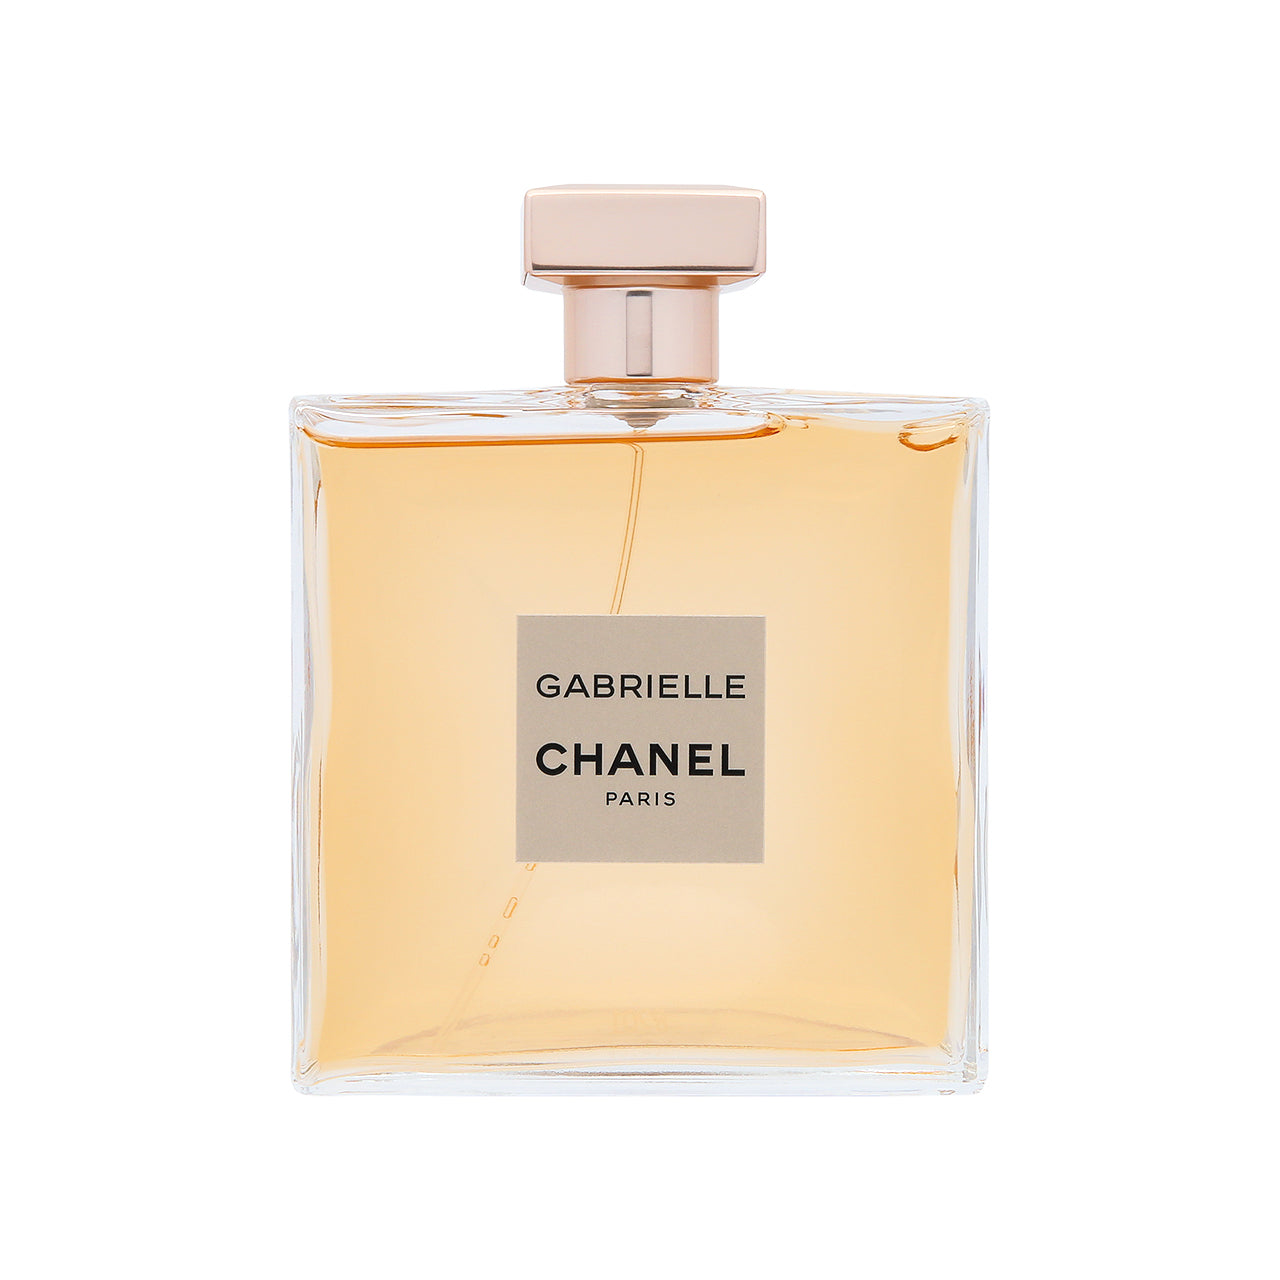 Chanel GABRIELLE CHANEL Eau de Parfum Spray 100ml